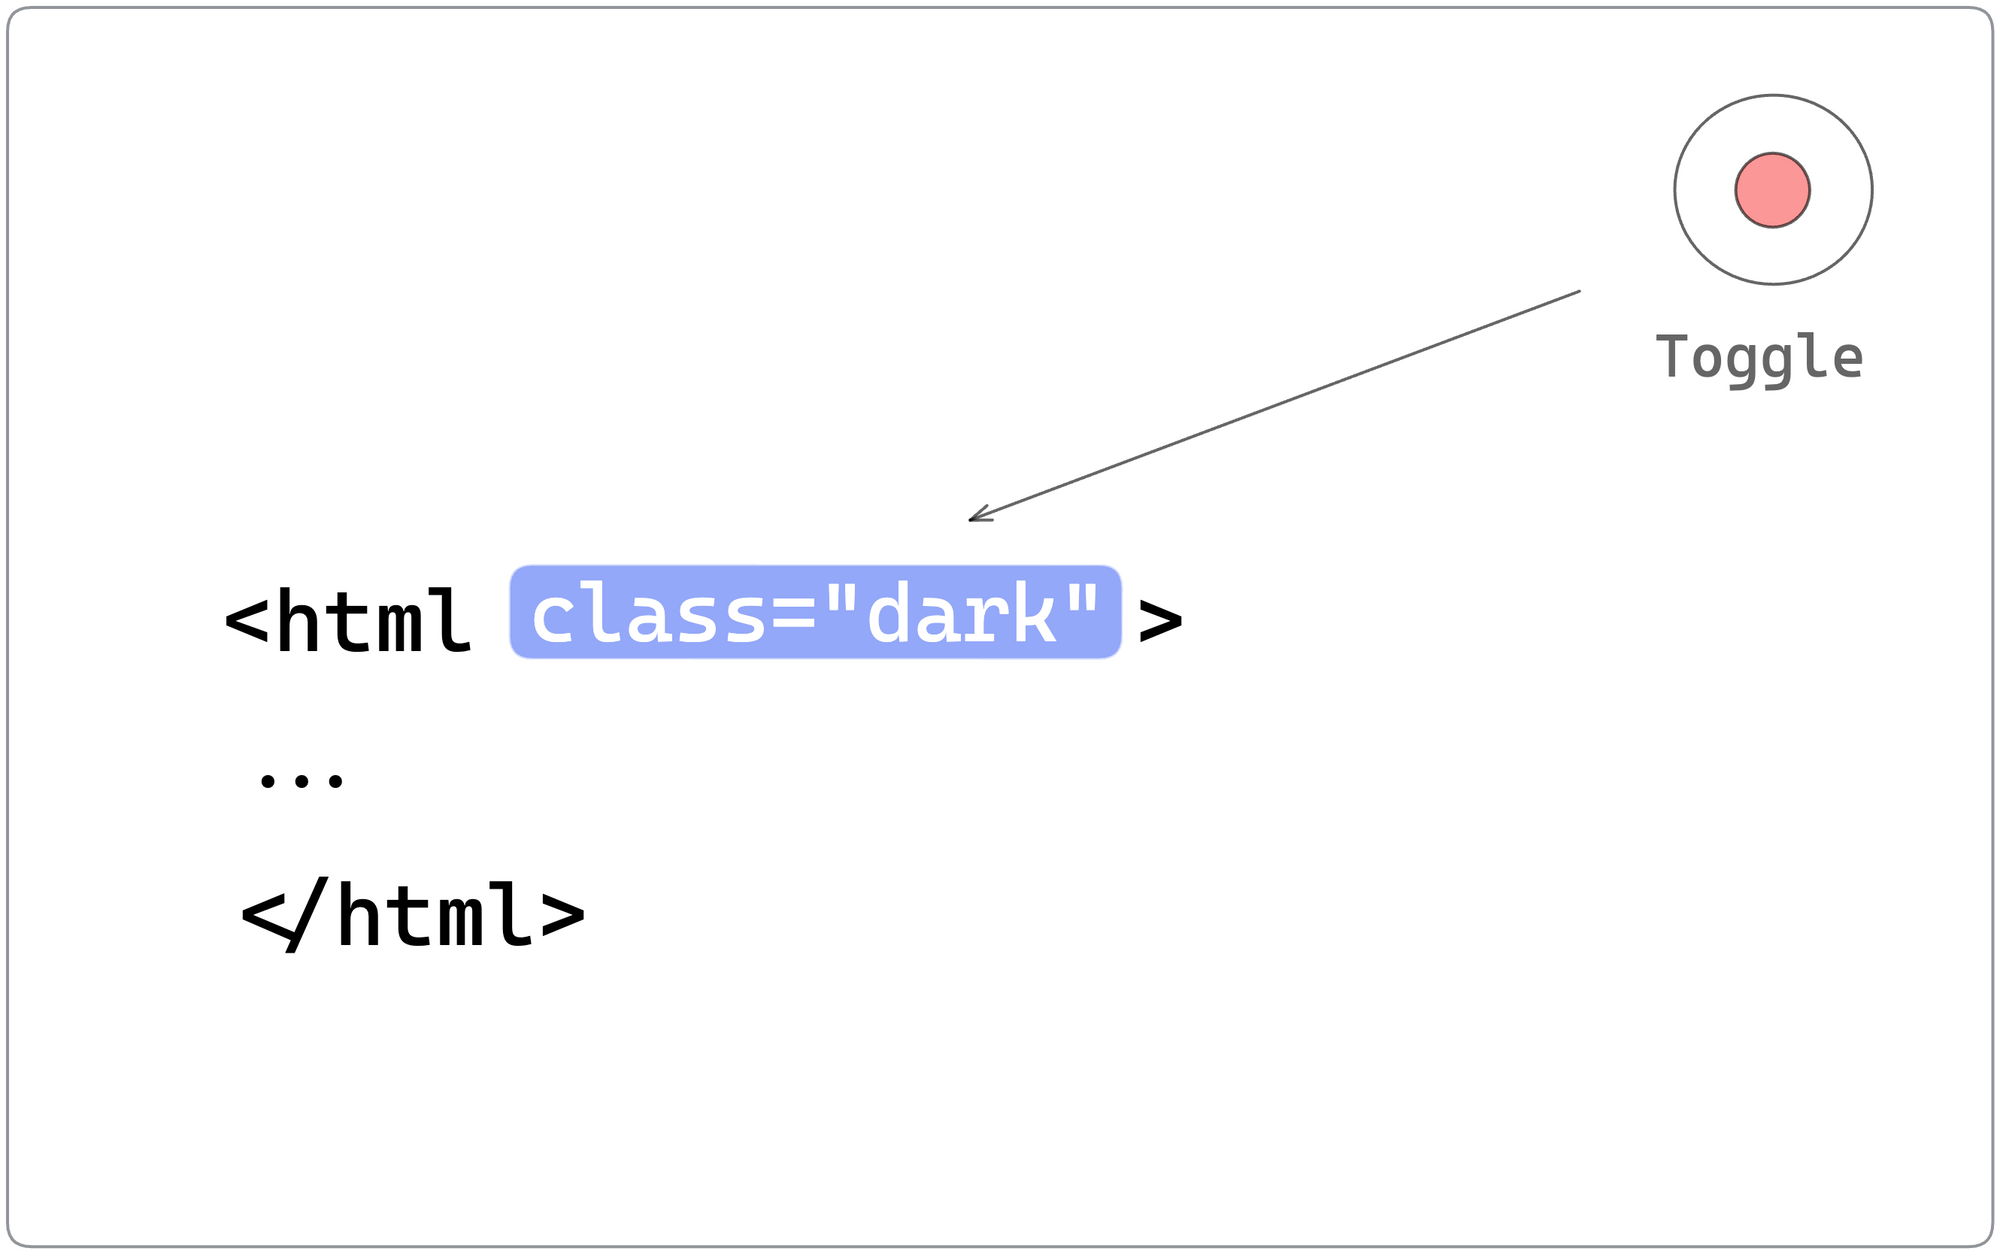 Adding a new “dark” class on toggle.